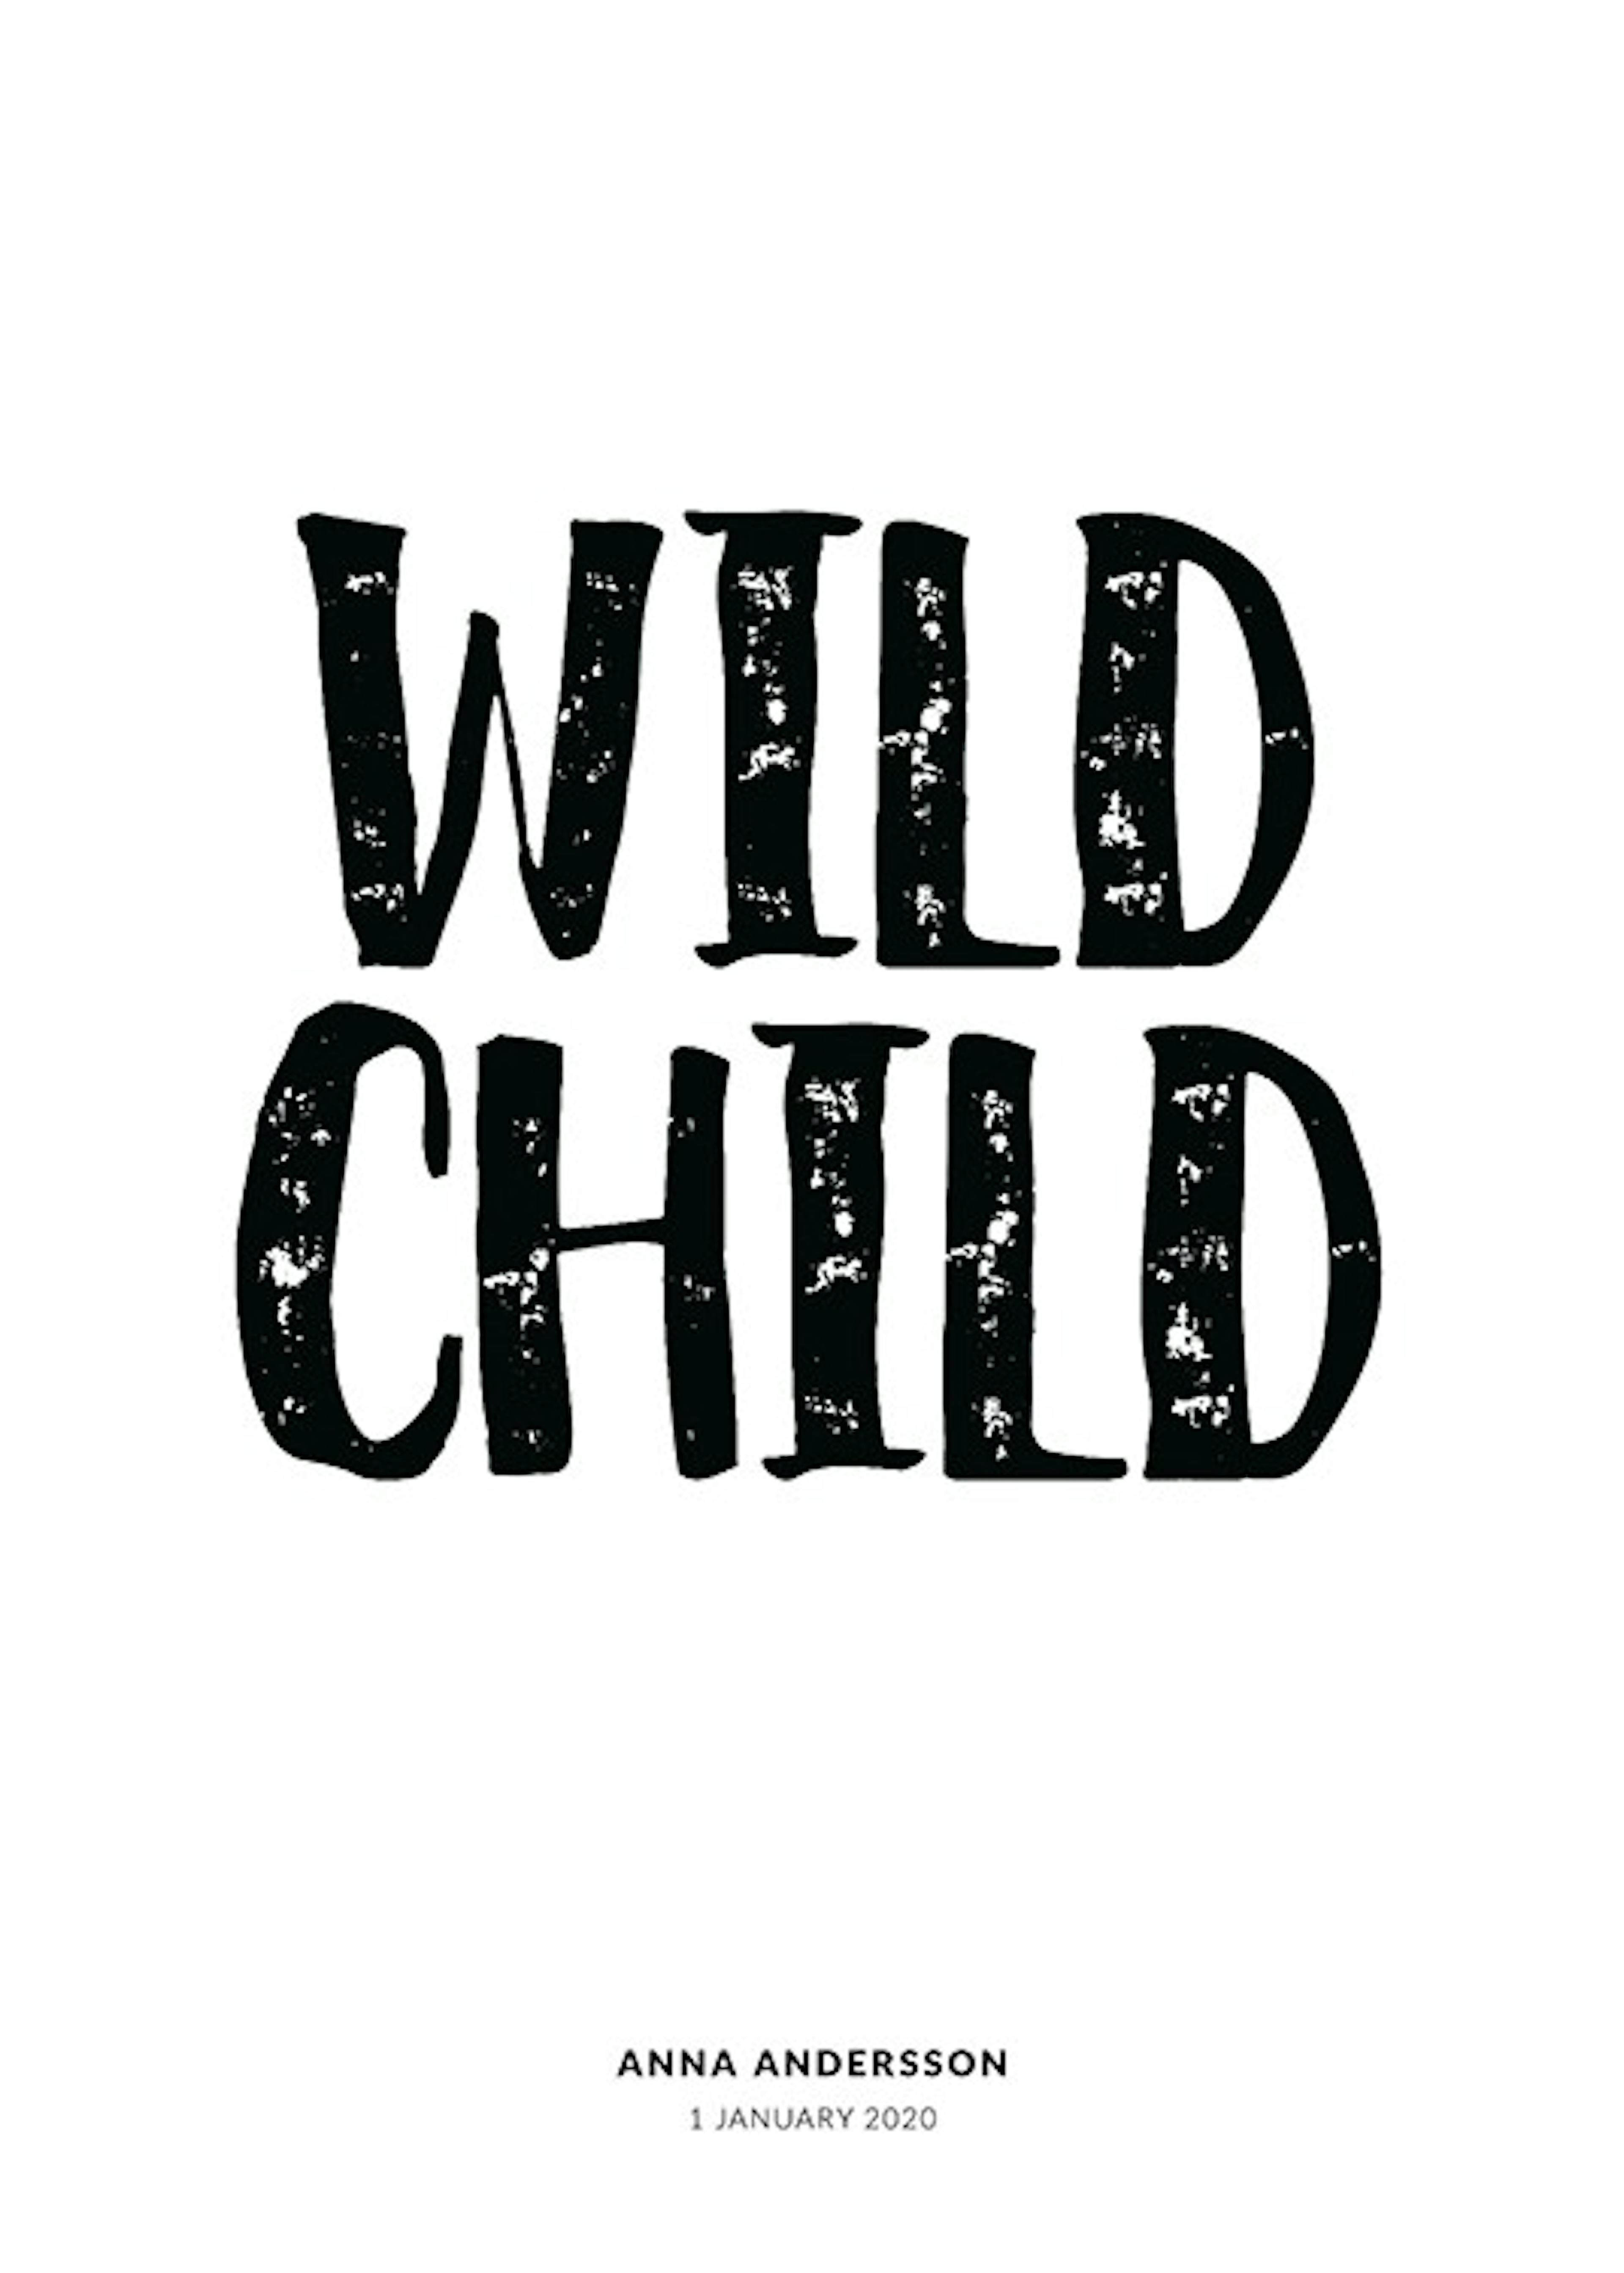 Wild Child Personal